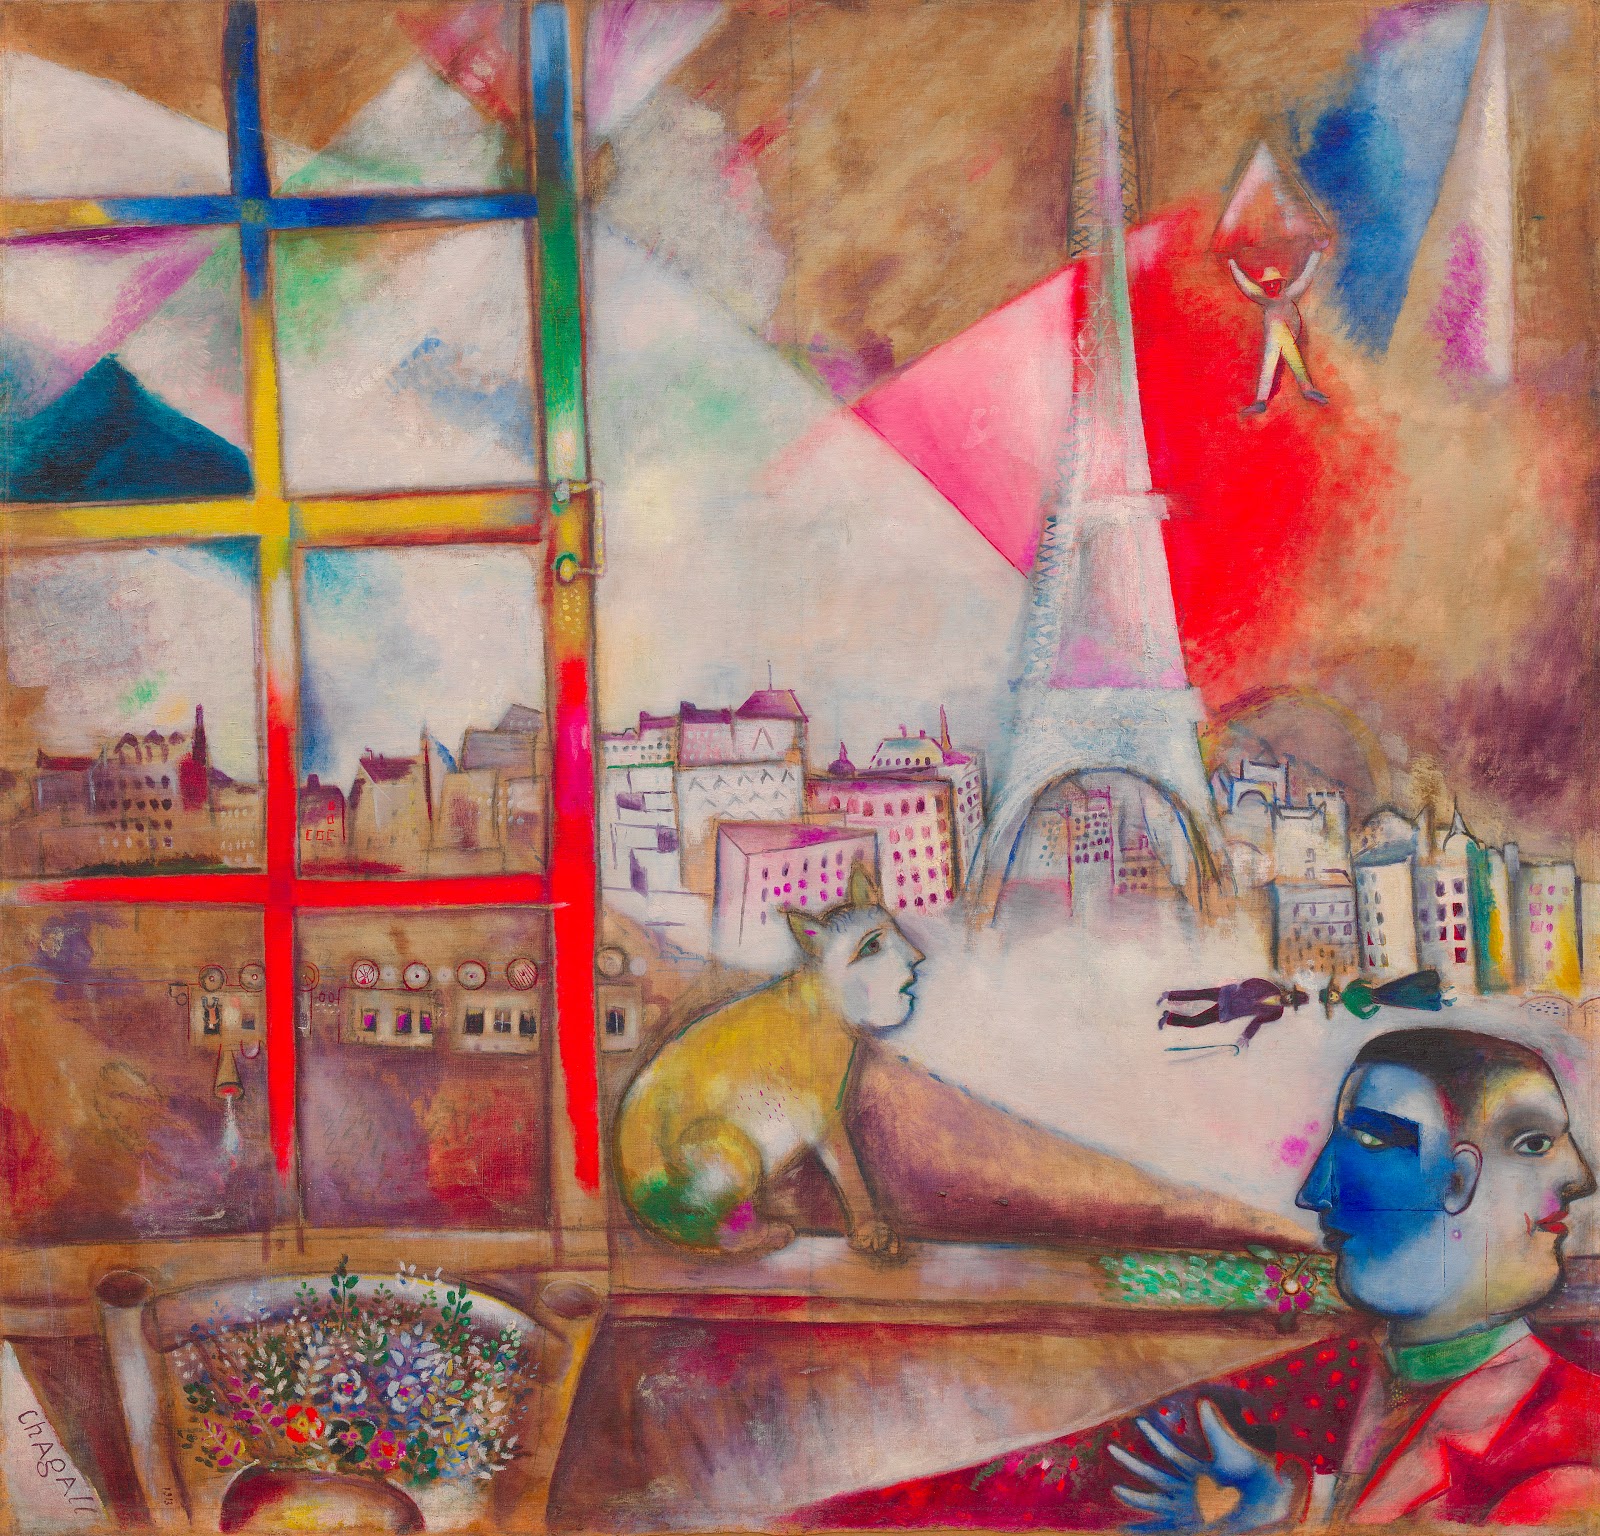 Marc+Chagall-1887-1985 (280).jpg